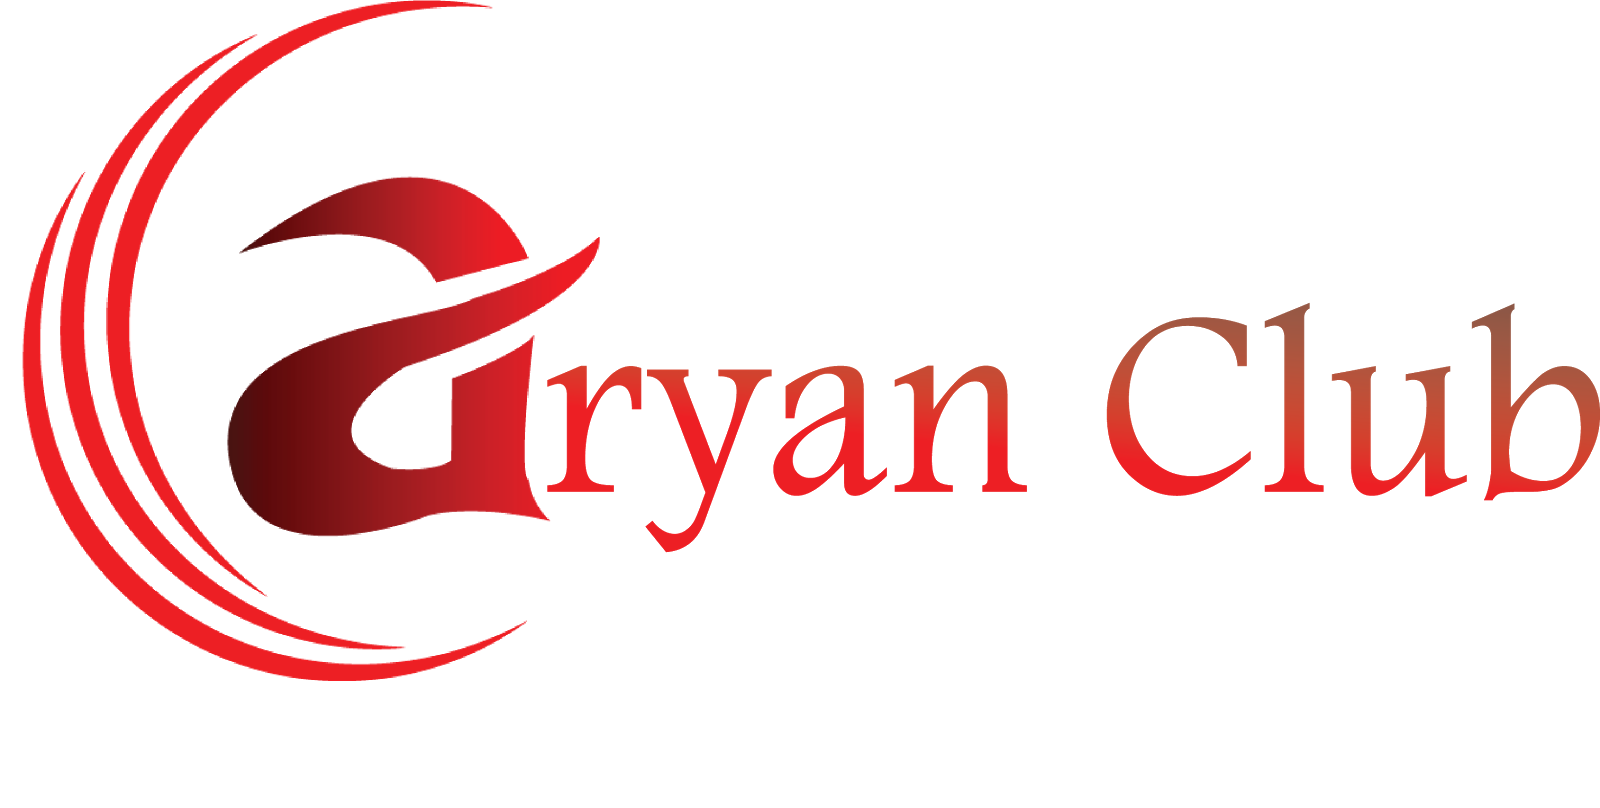 ARYAN CLUB